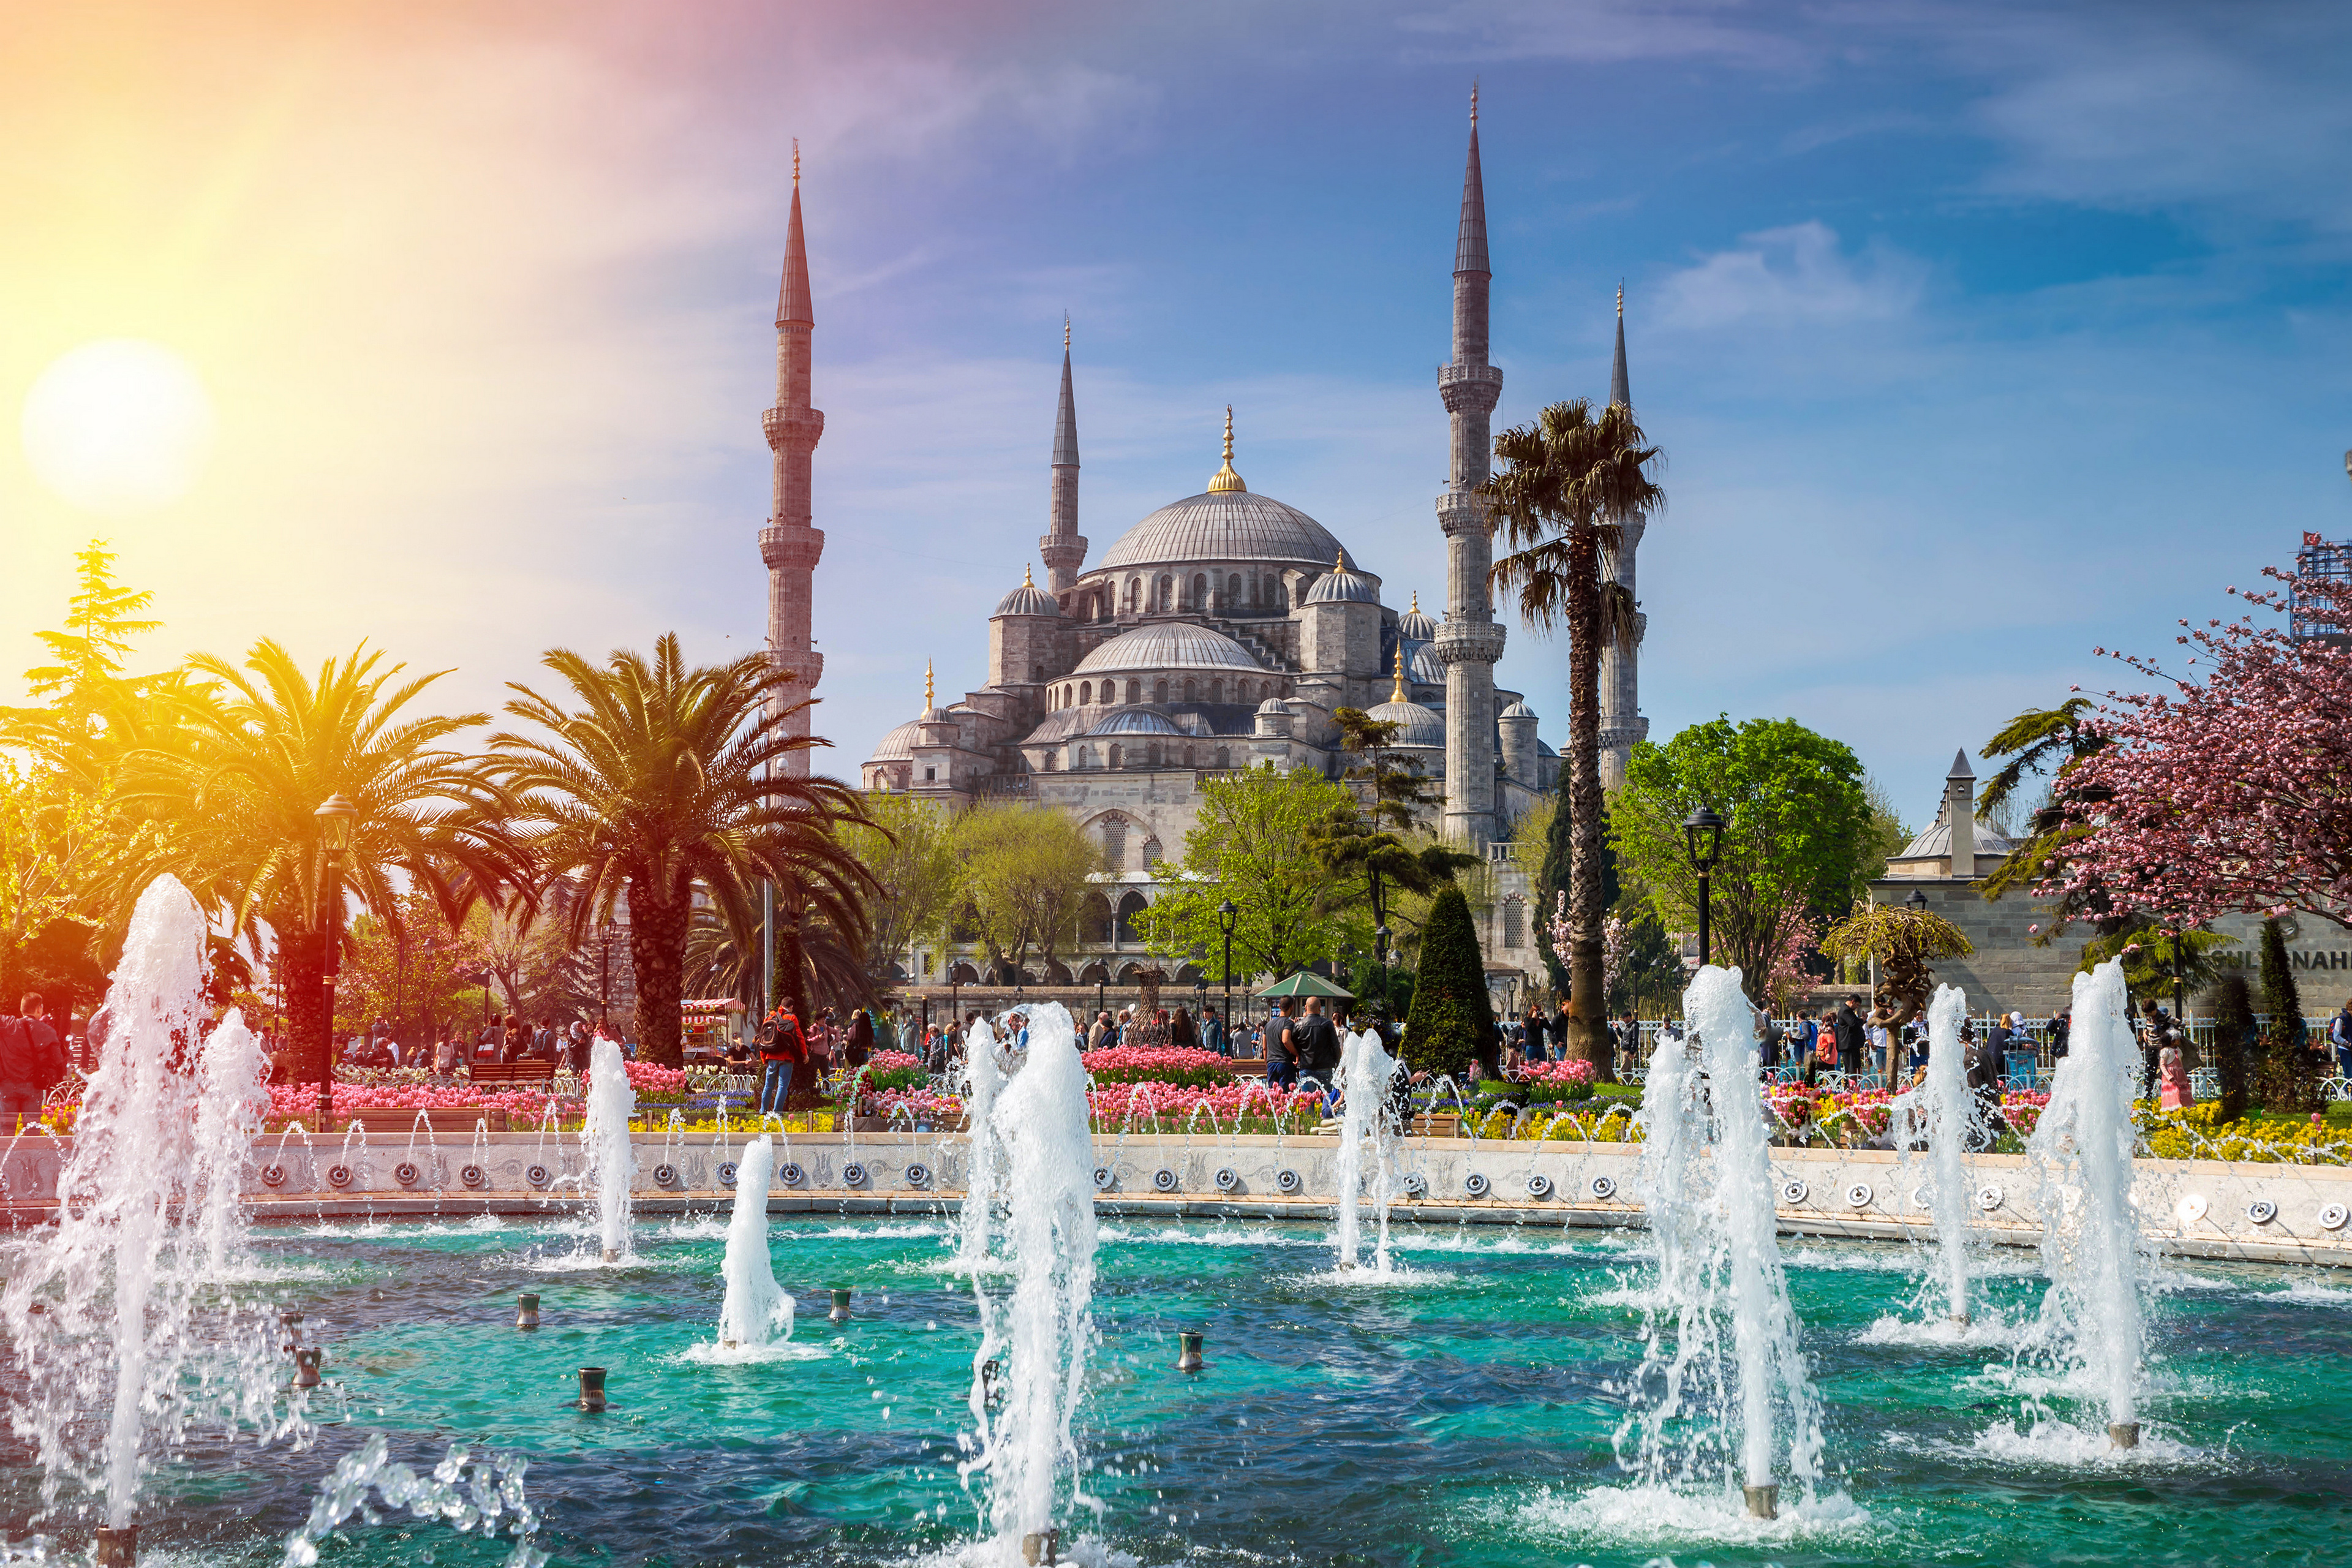 General 3840x2560 Istanbul Turkey Blue Mosque city garden sky sunlight mosque fountain palm trees Maka Albarn Dubai